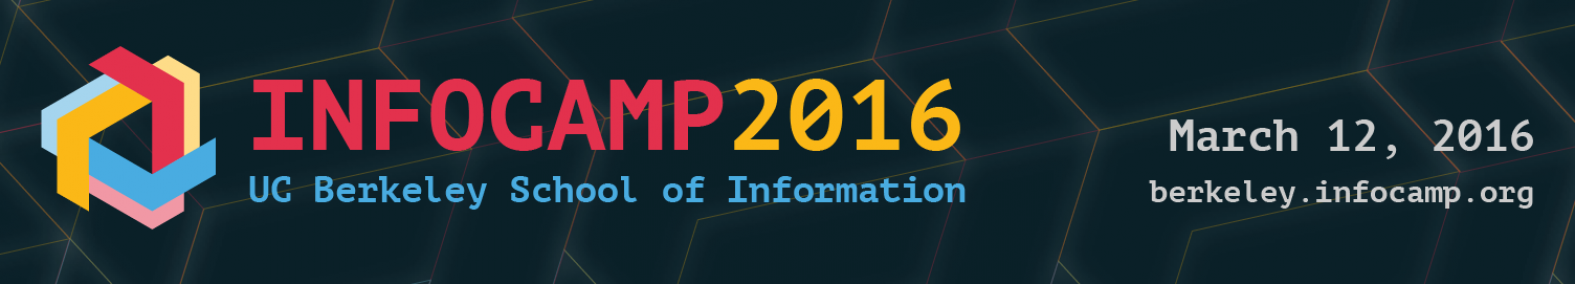 infocamp-2016-header.png